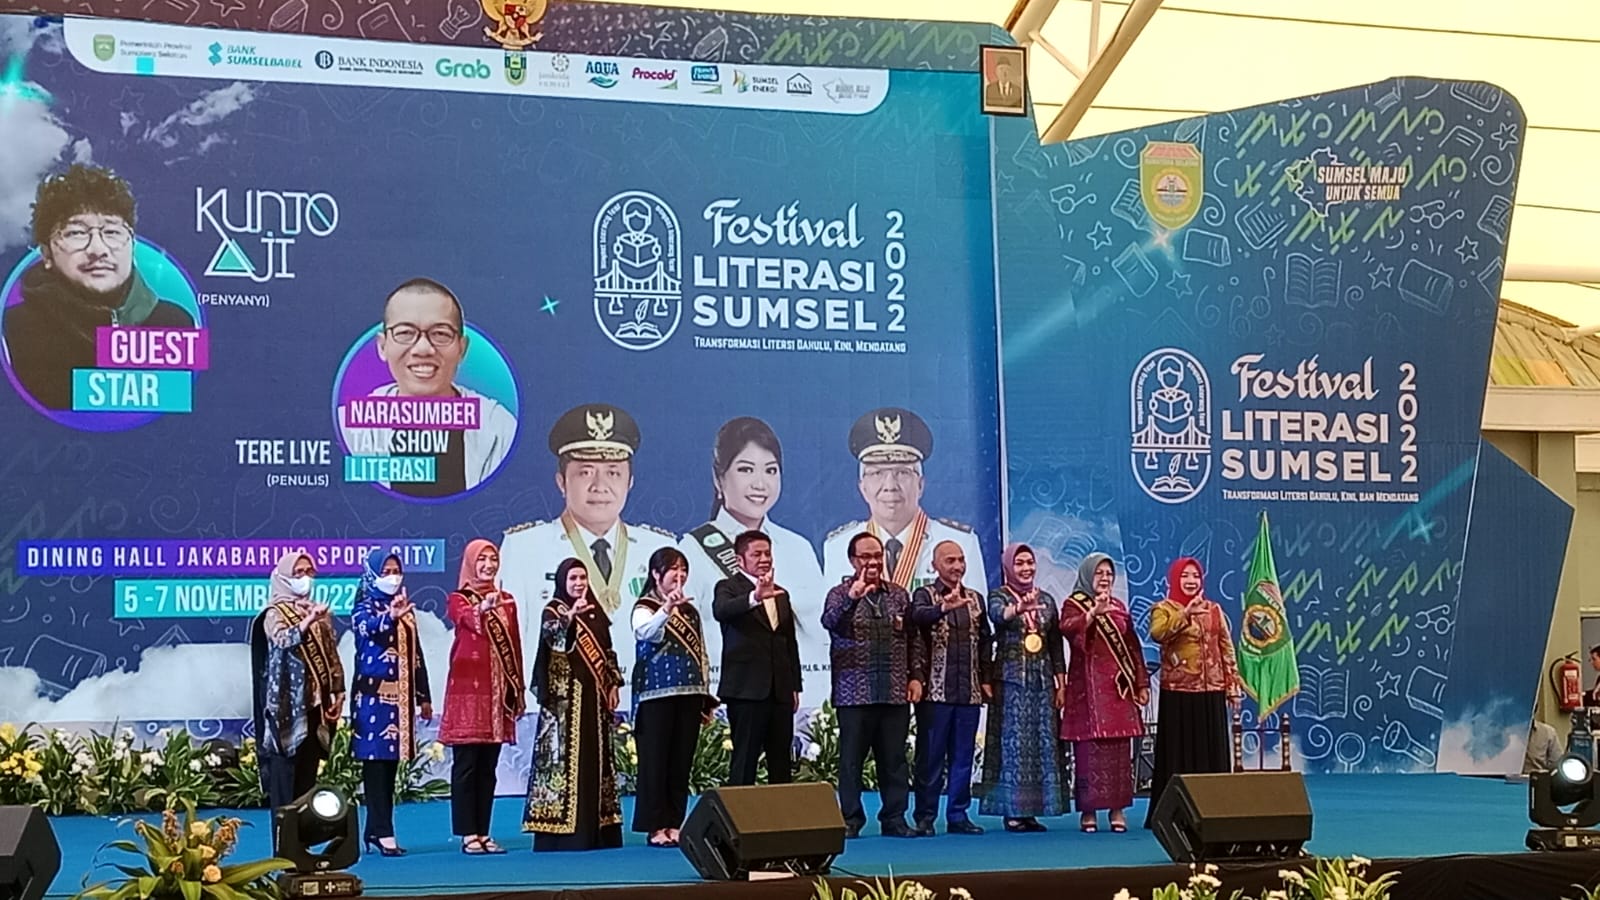 Festival Literasi Sumsel Dibuka, Minat Baca Harus Digalakkan